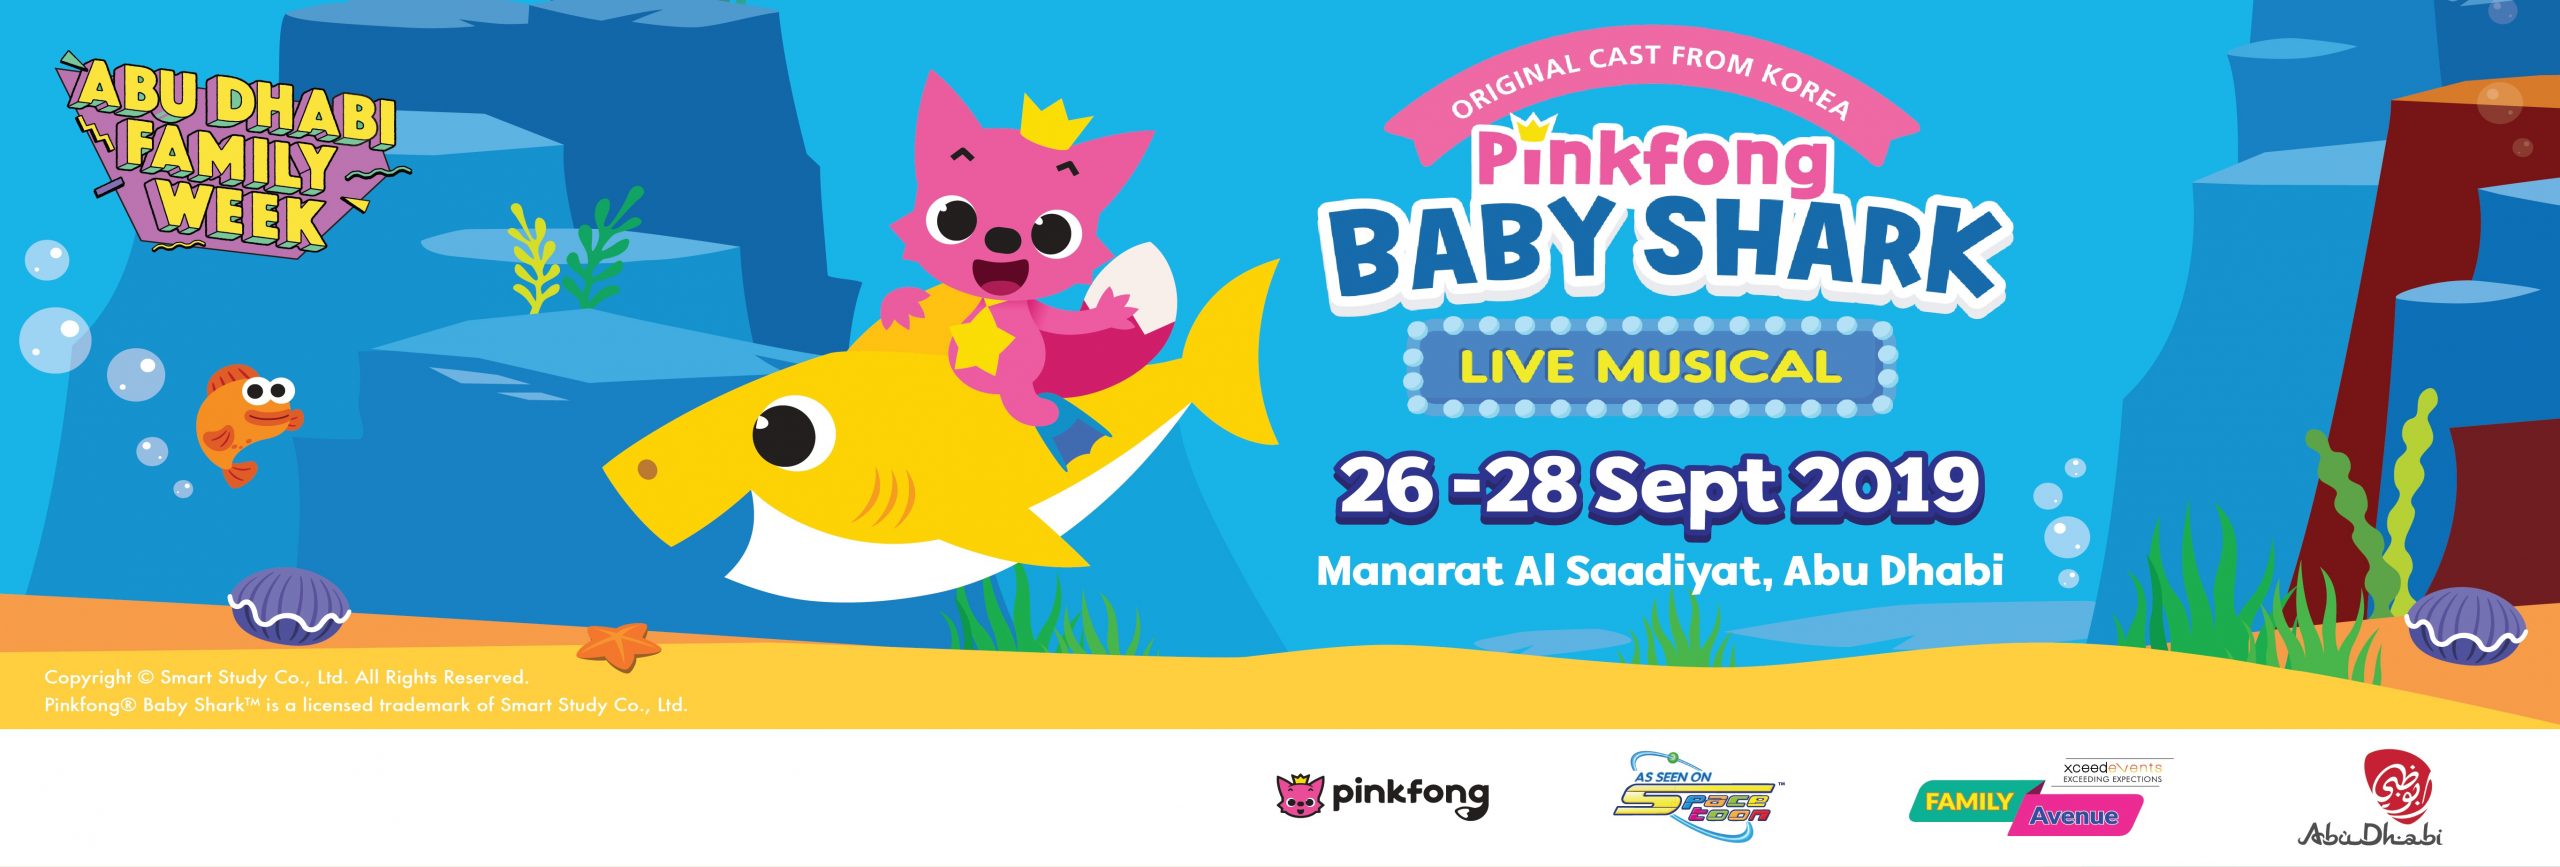 Abu Dhabi Family Week 2019: Pinkfong Baby Shark Live Musical - Coming Soon in UAE